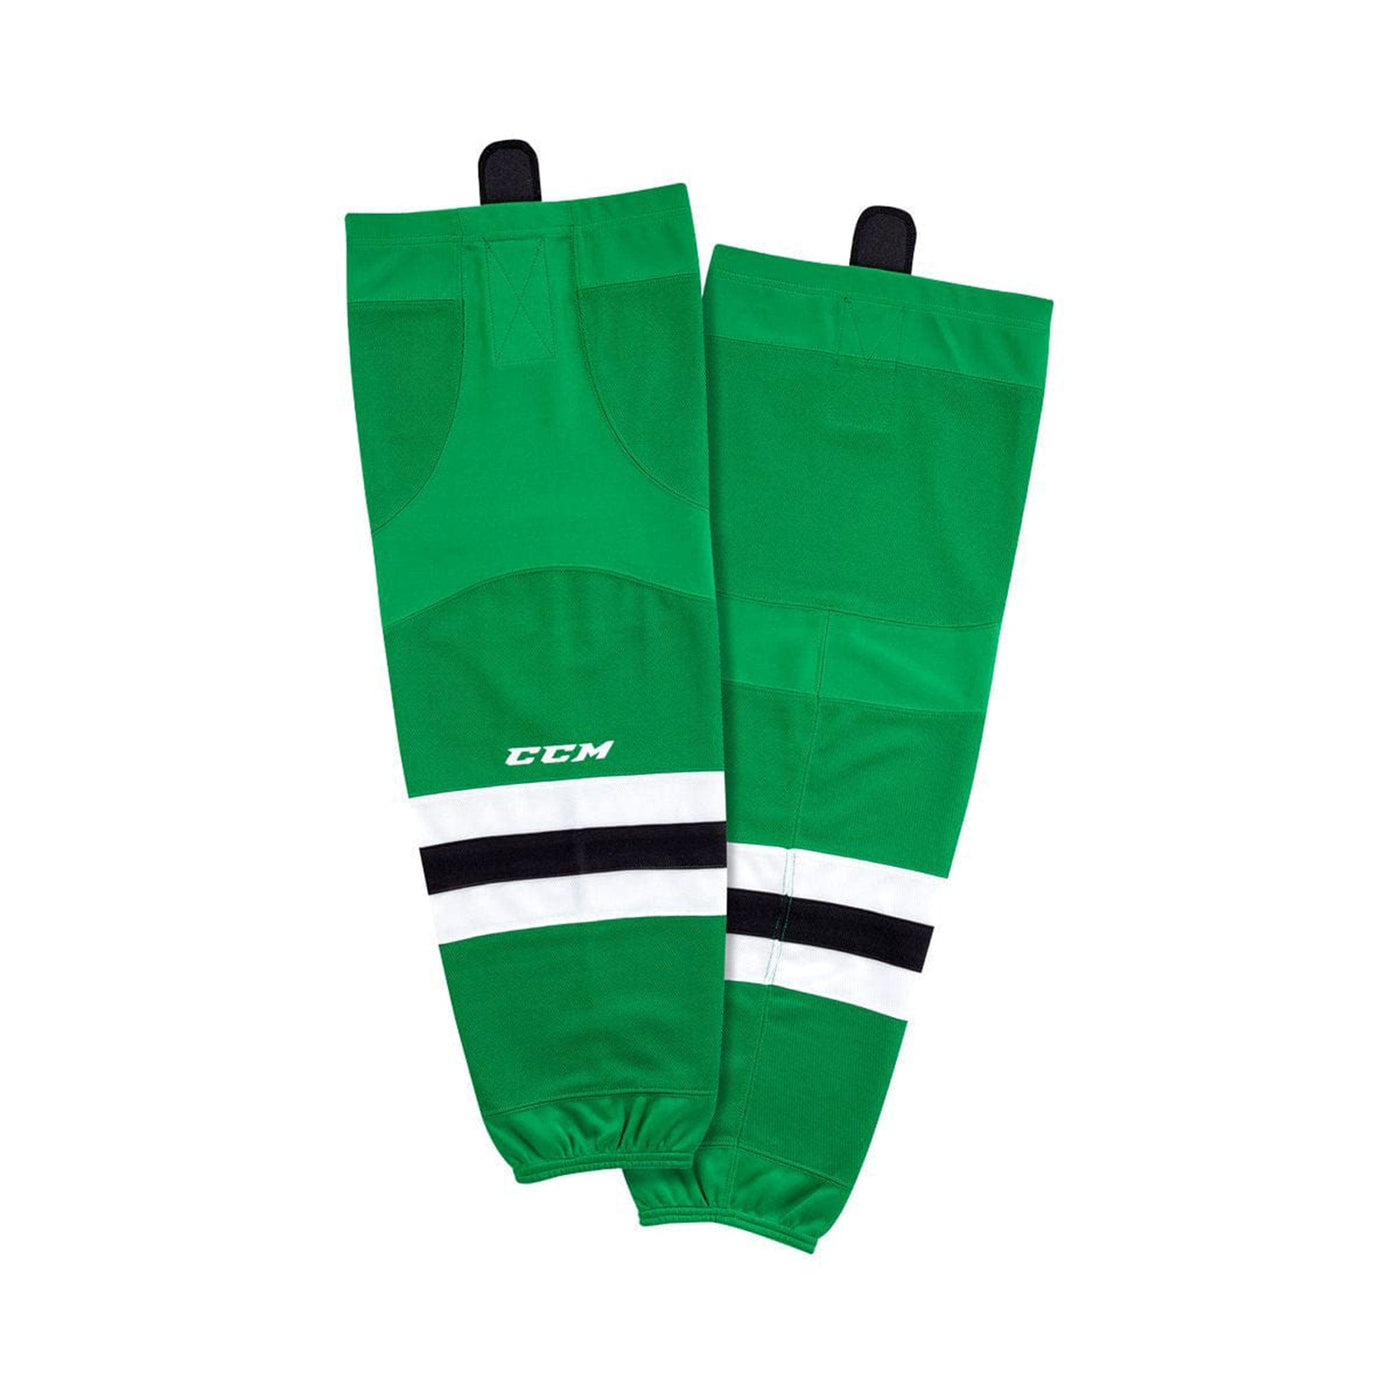 Dallas Stars Home CCM Quicklite 8000 Hockey Socks - The Hockey Shop Source For Sports